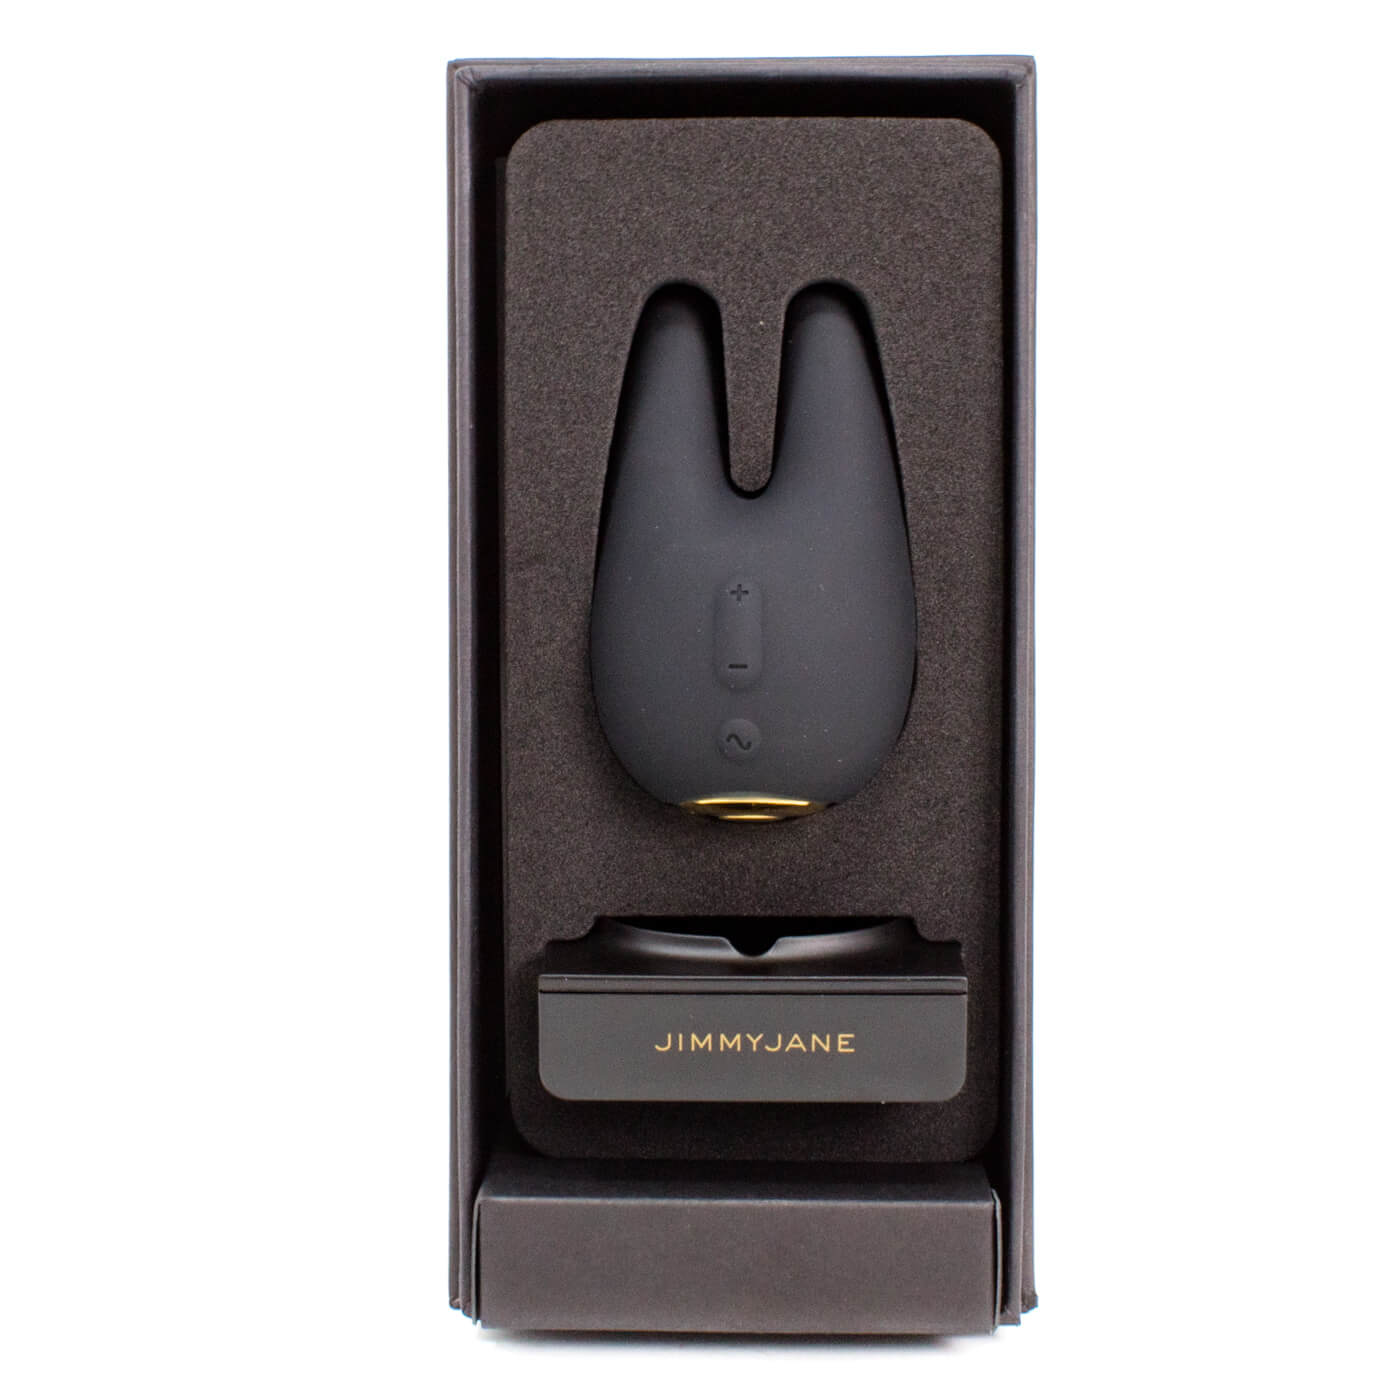 Jimmyjane FORM 2 24K Gold Luxury Edition Clitoral Vibe